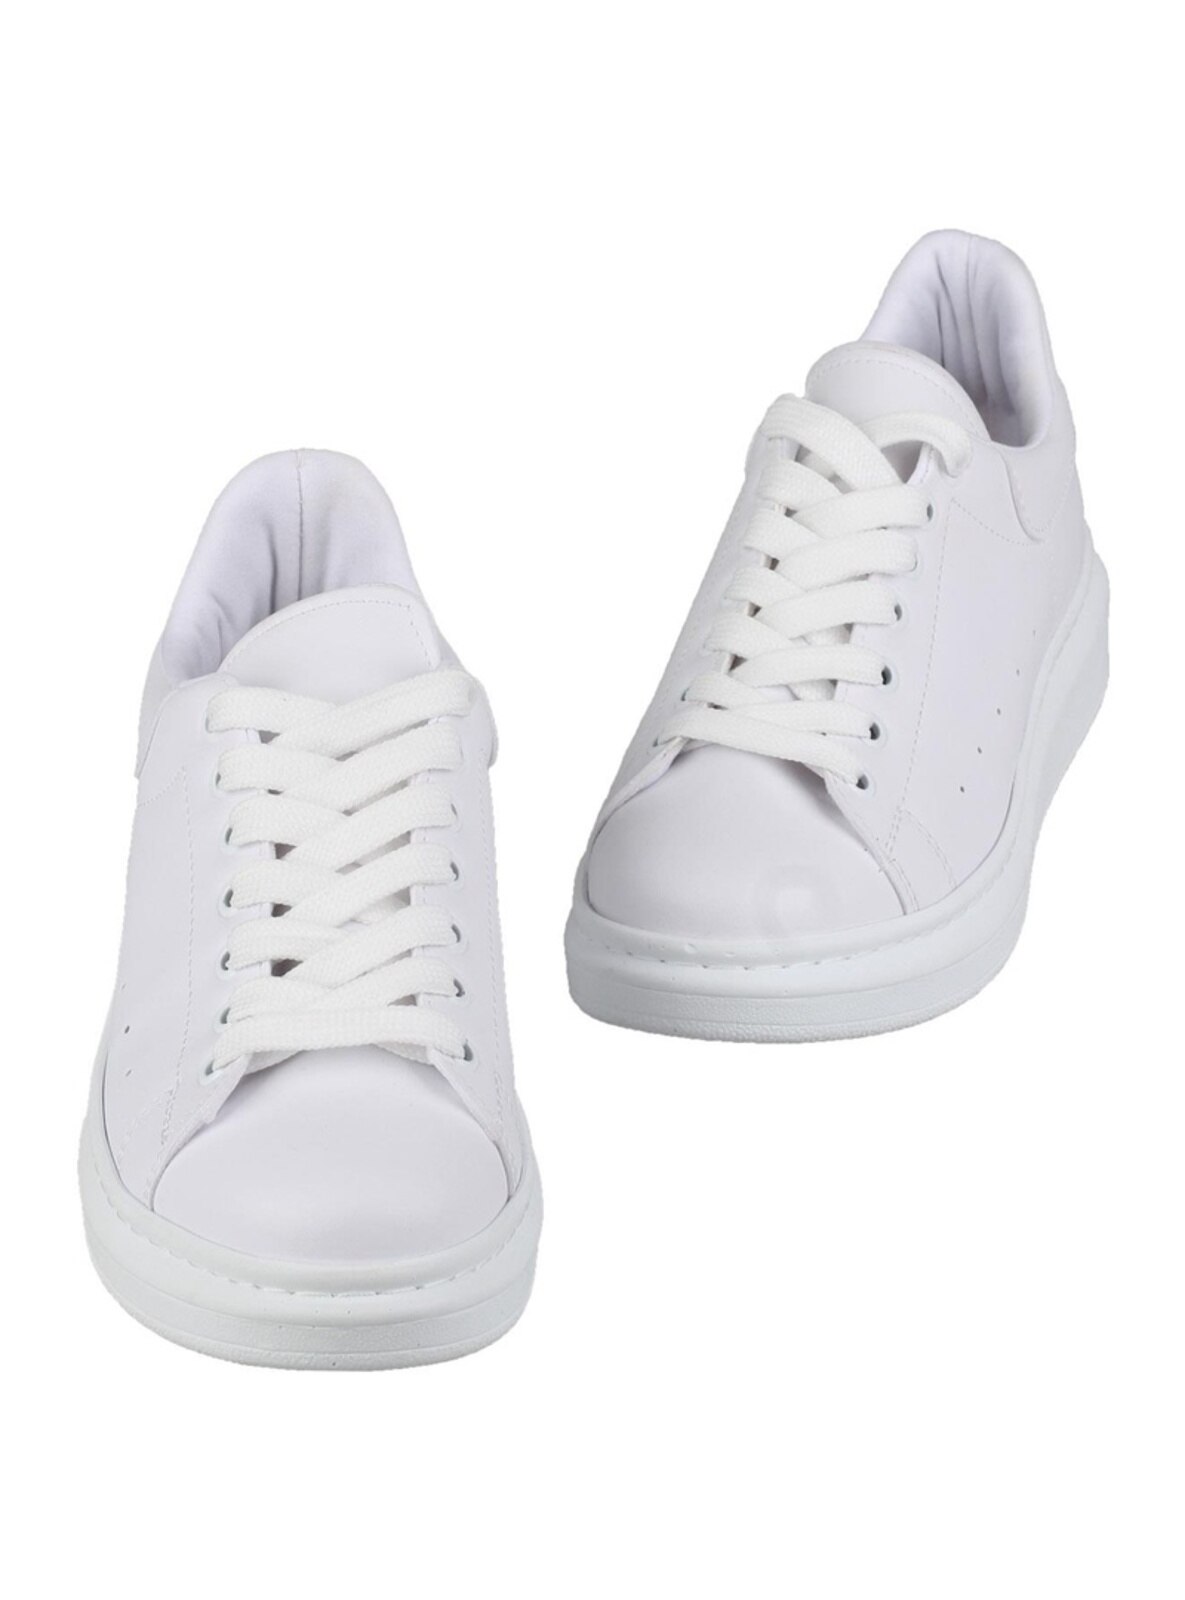 Cerebro Vicio Anual White - Sport - Polyurethane - Sports Shoes